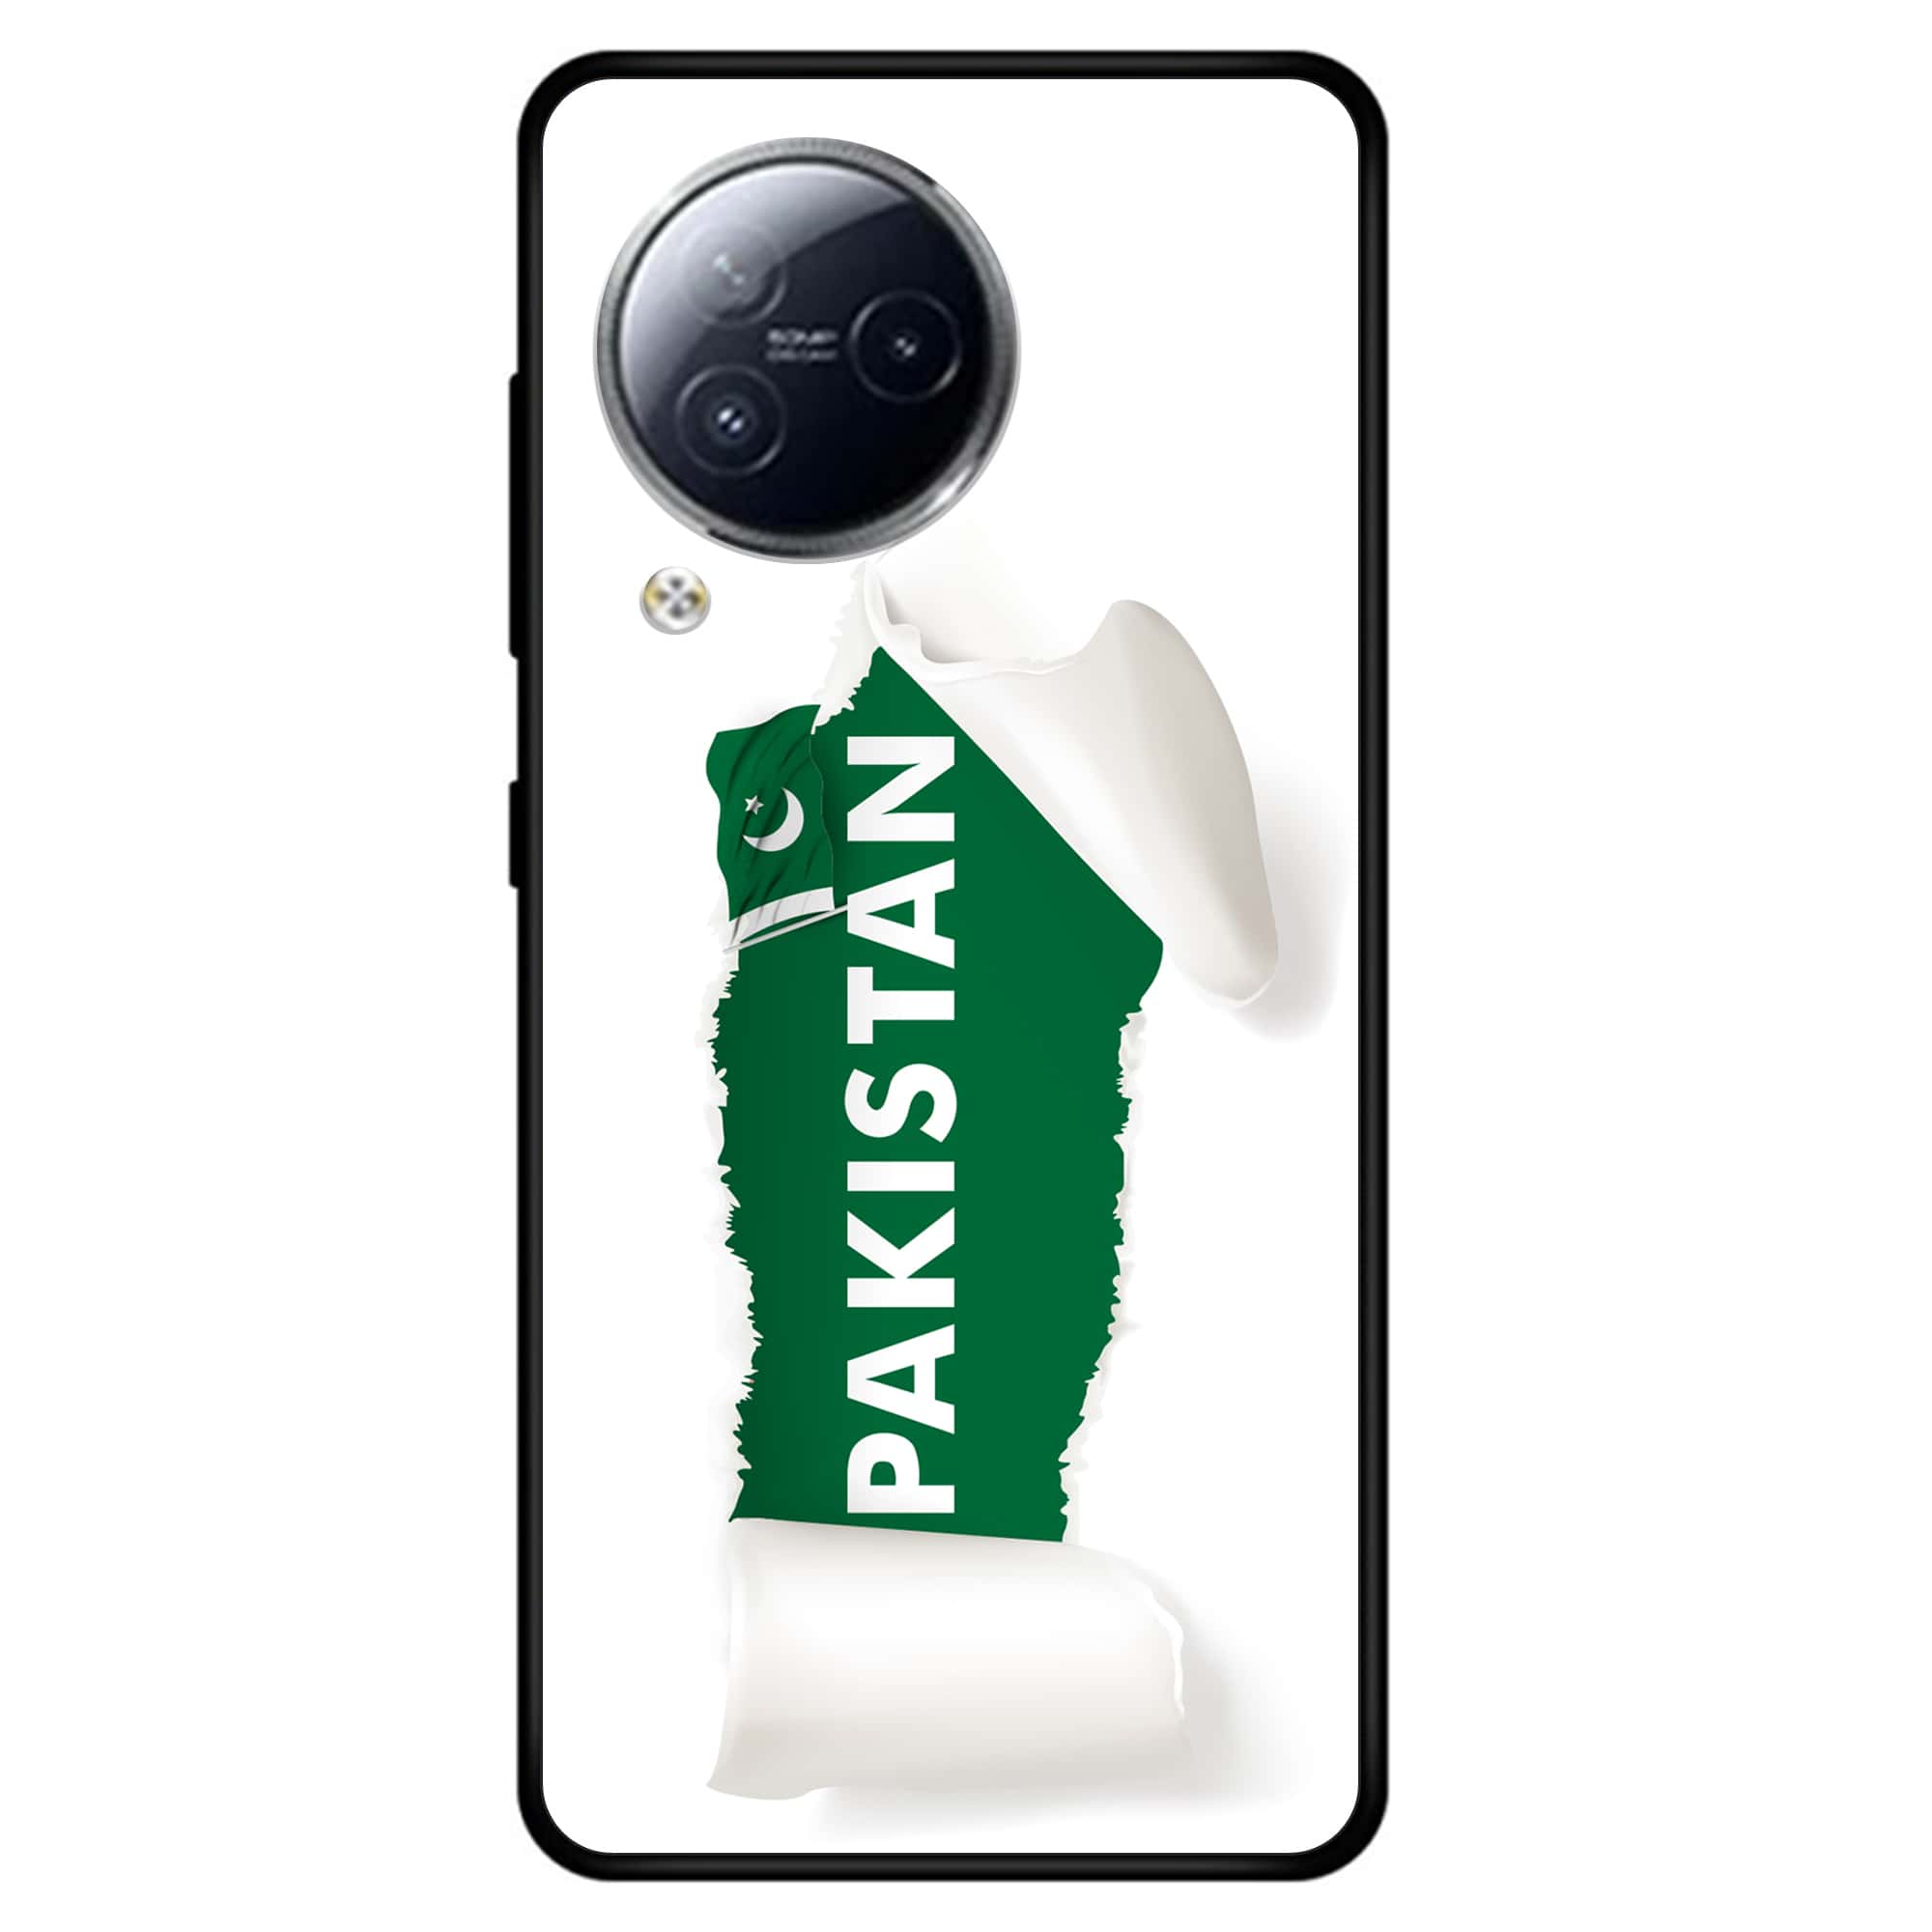 XIAOMI CIVI 3 - Pakistani Flag Series - Premium Printed Glass soft Bumper shock Proof Case